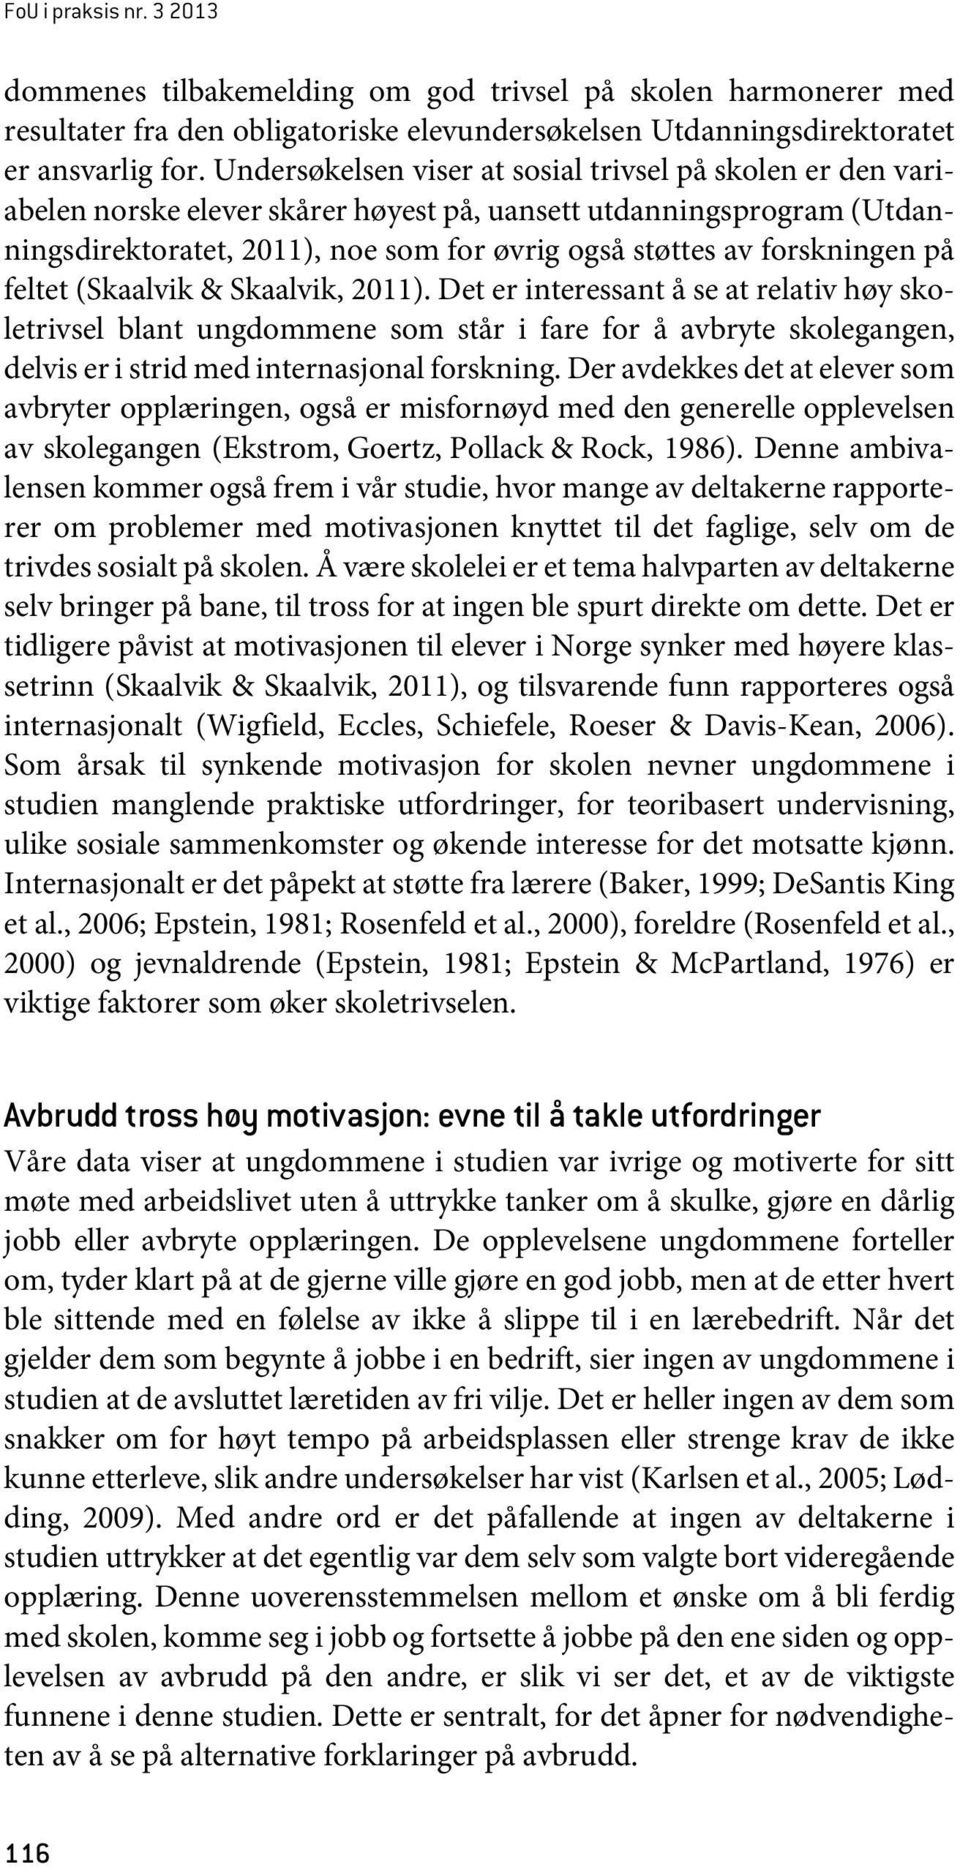 forskningen på feltet (Skaalvik & Skaalvik, 2011).